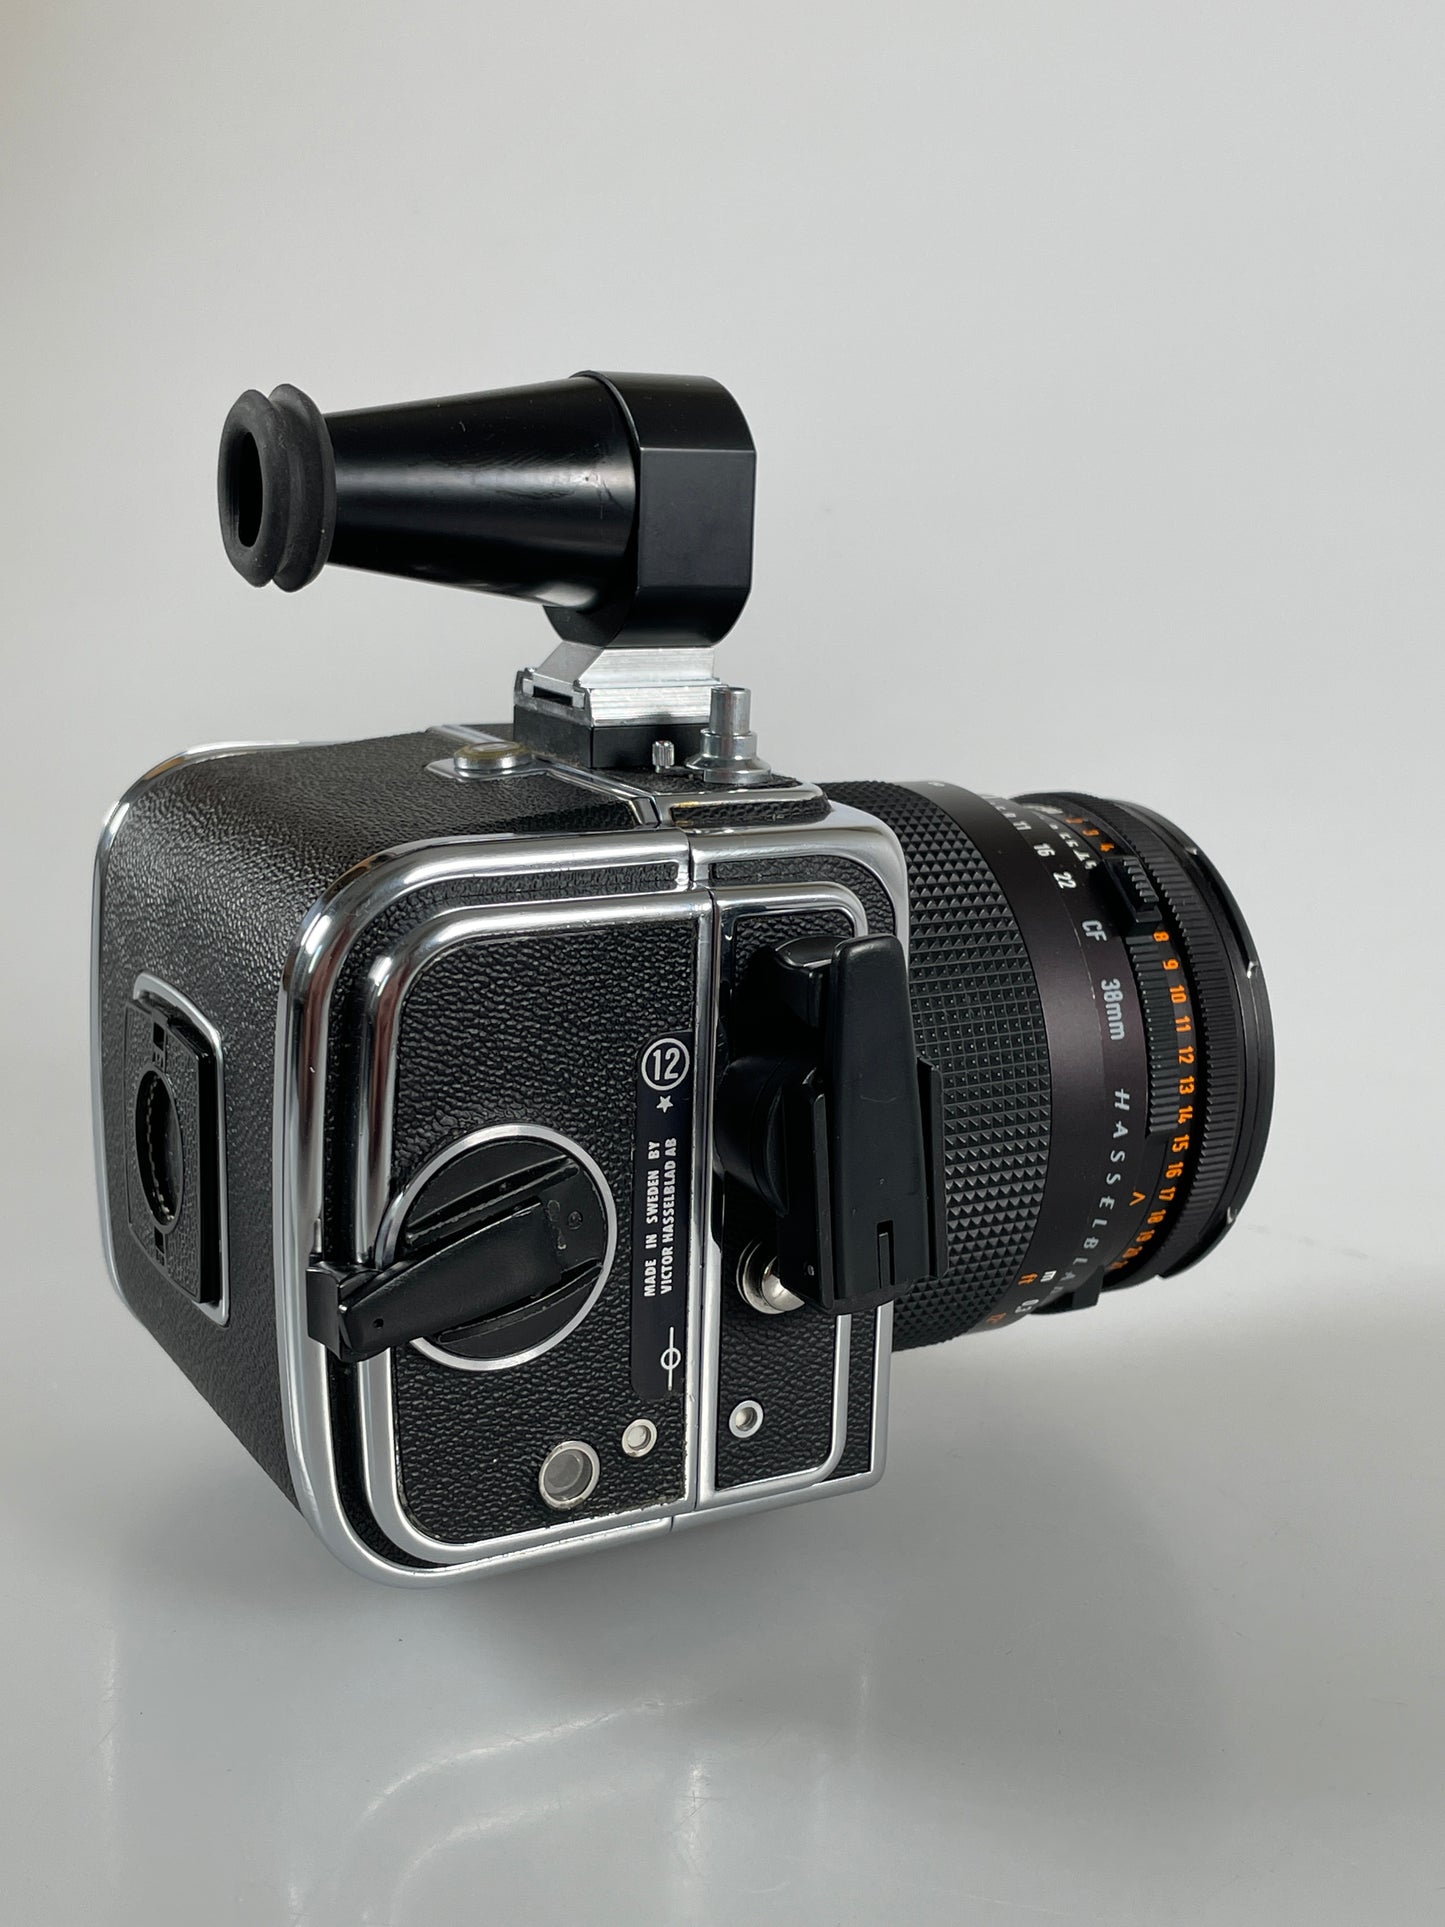 Hasselblad SWC/M Camera Biogon 38mm Lens Finder, A12 Back Chrome